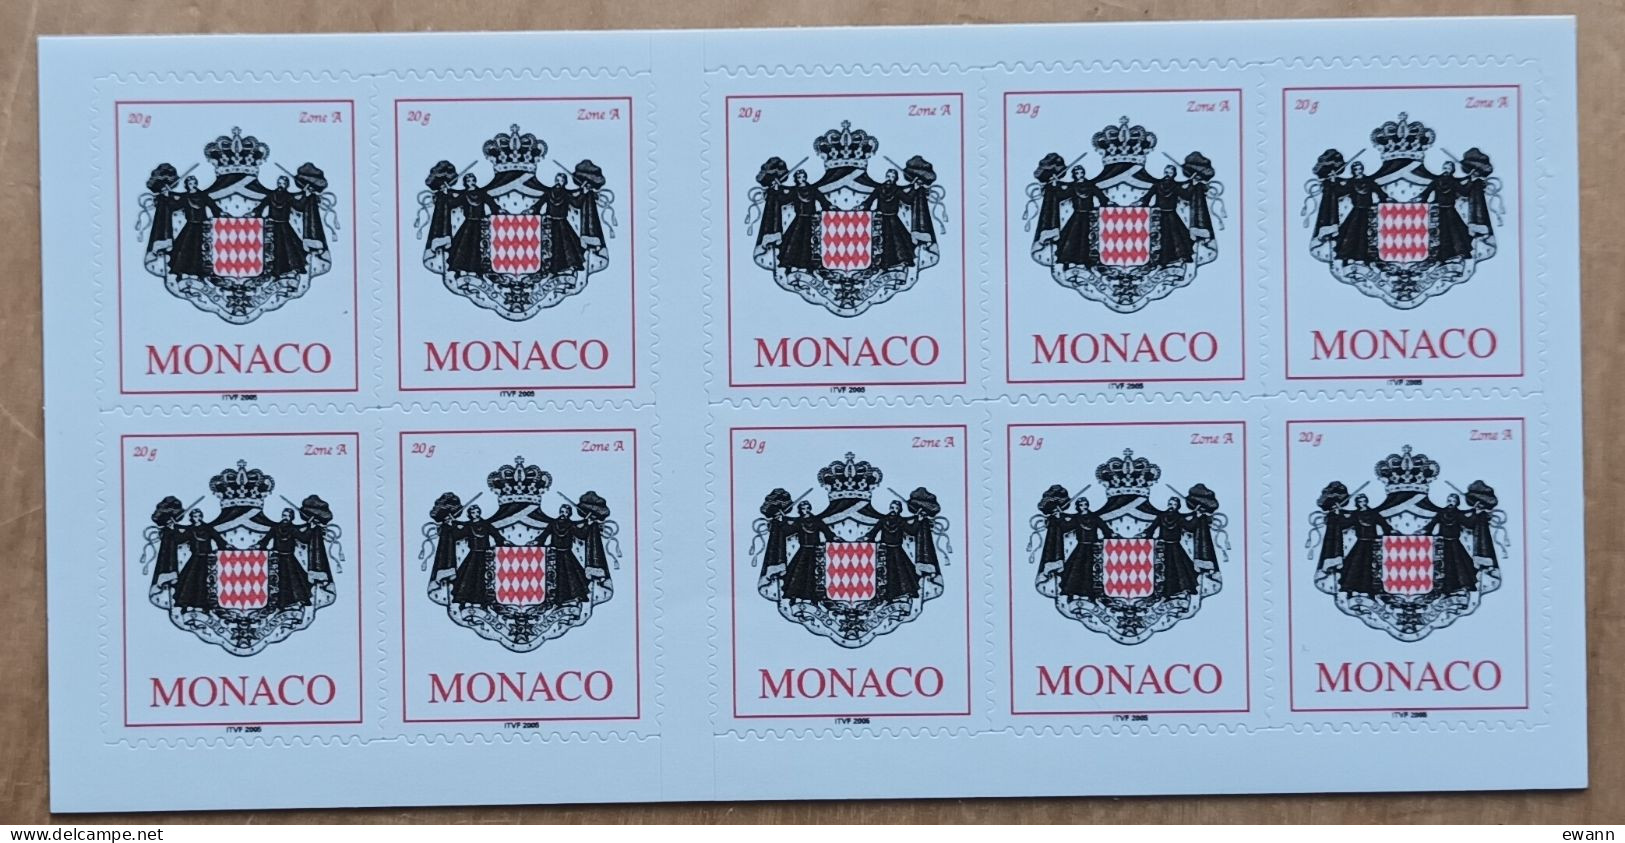 Monaco - Carnet YT N°15 - Armoiries - 2006 - Neuf - Booklets